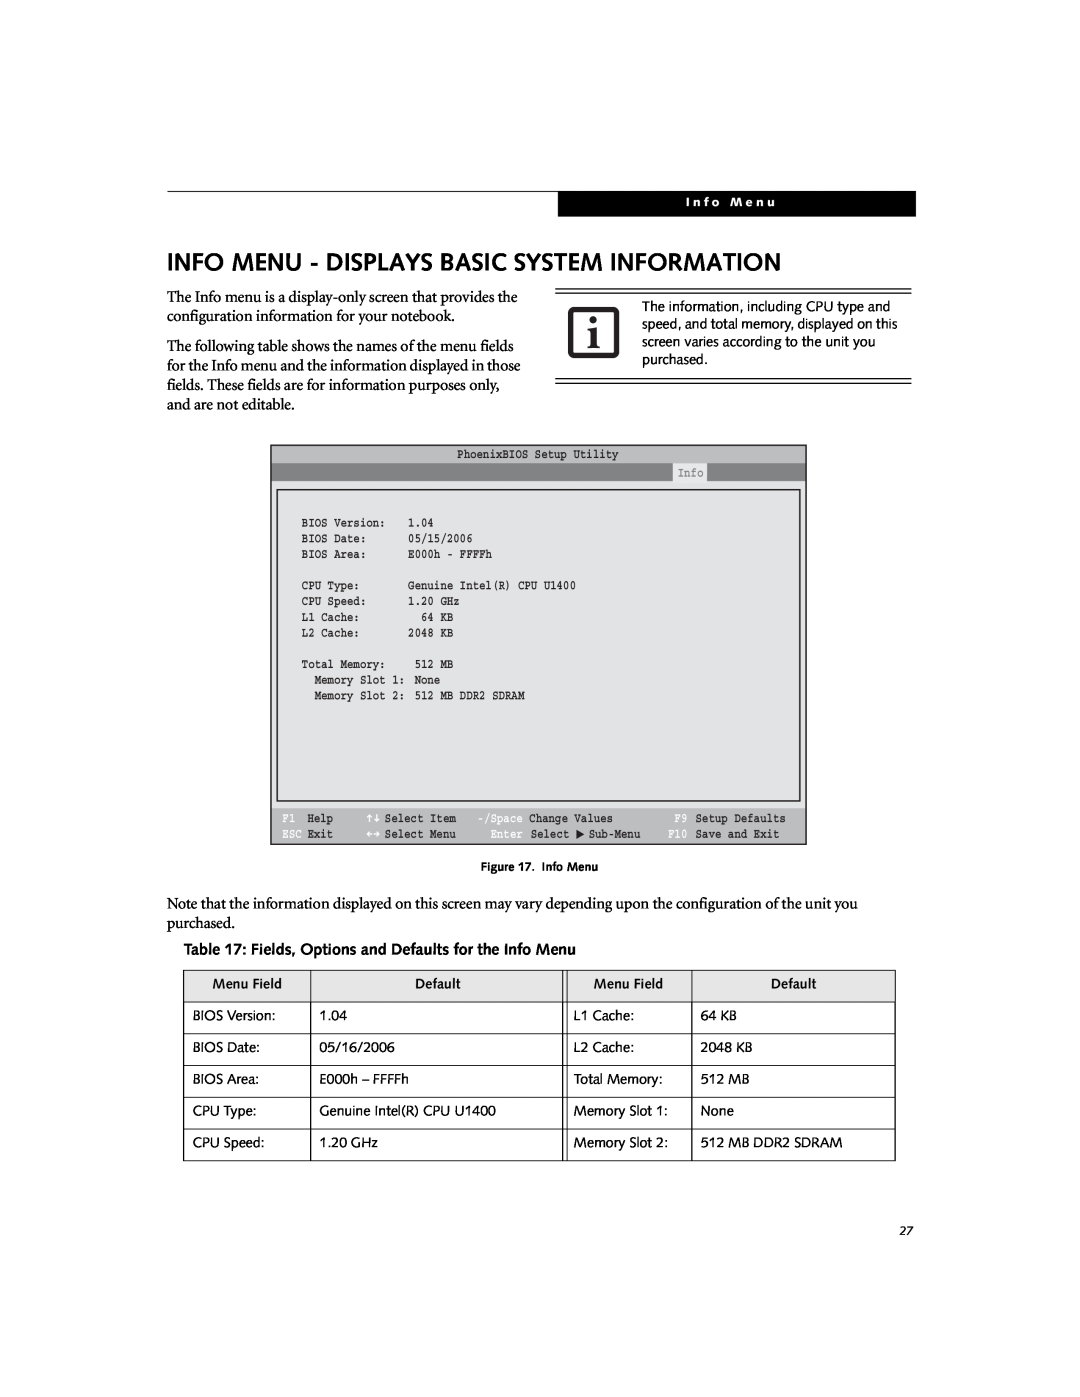 Fujitsu B6210 manual Info Menu - Displays Basic System Information, Fields, Options and Defaults for the Info Menu 